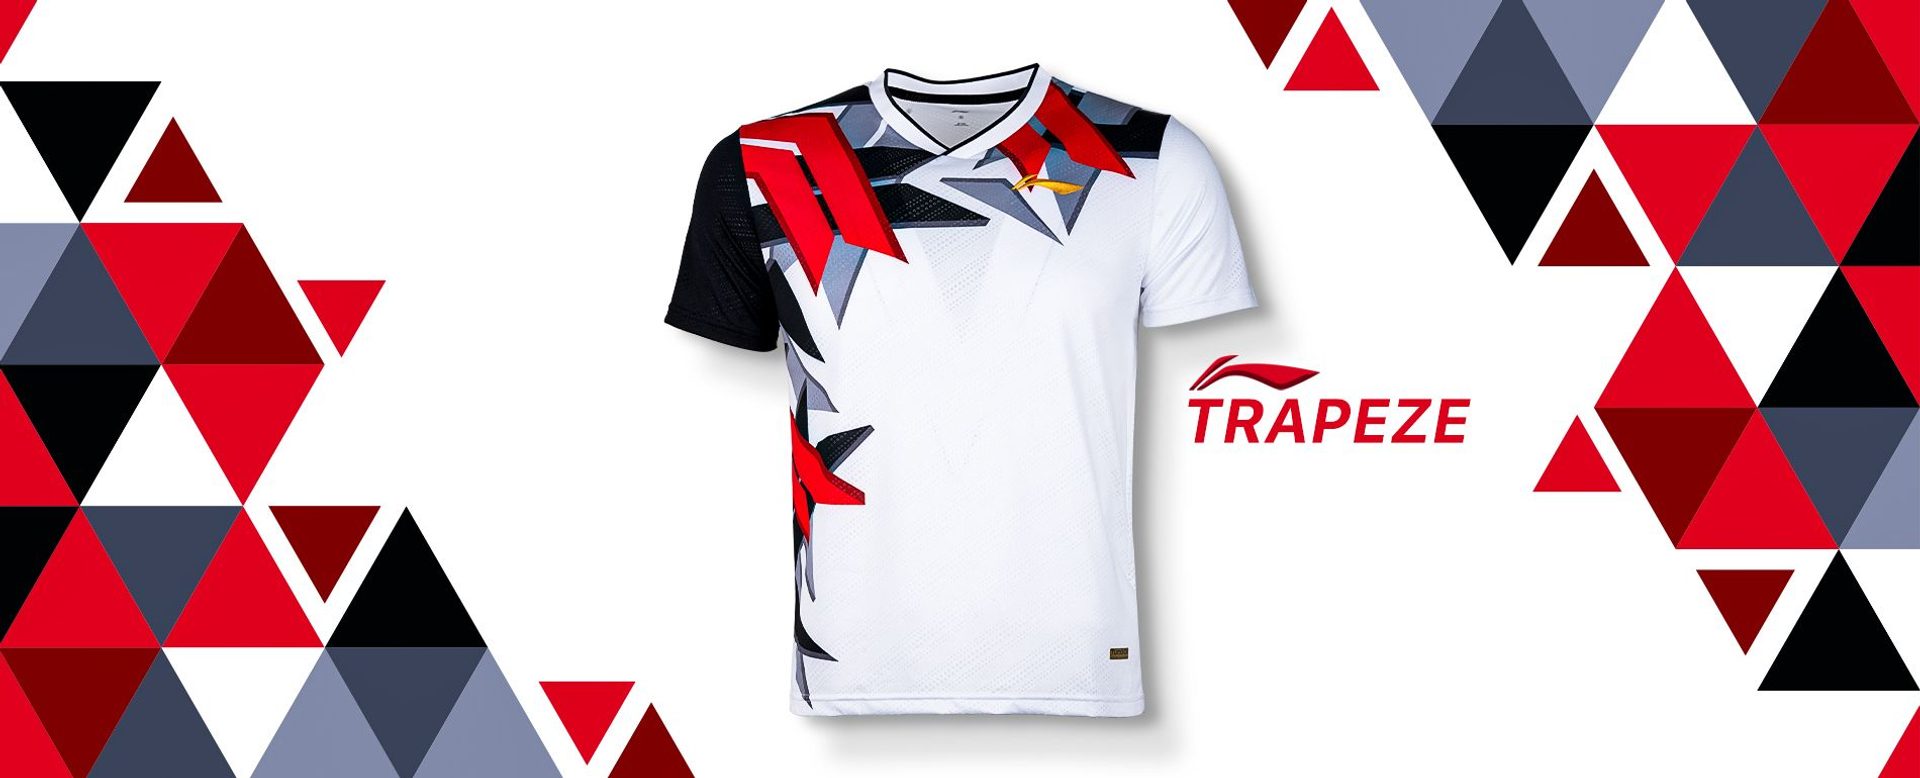 Trapeze T-shirt